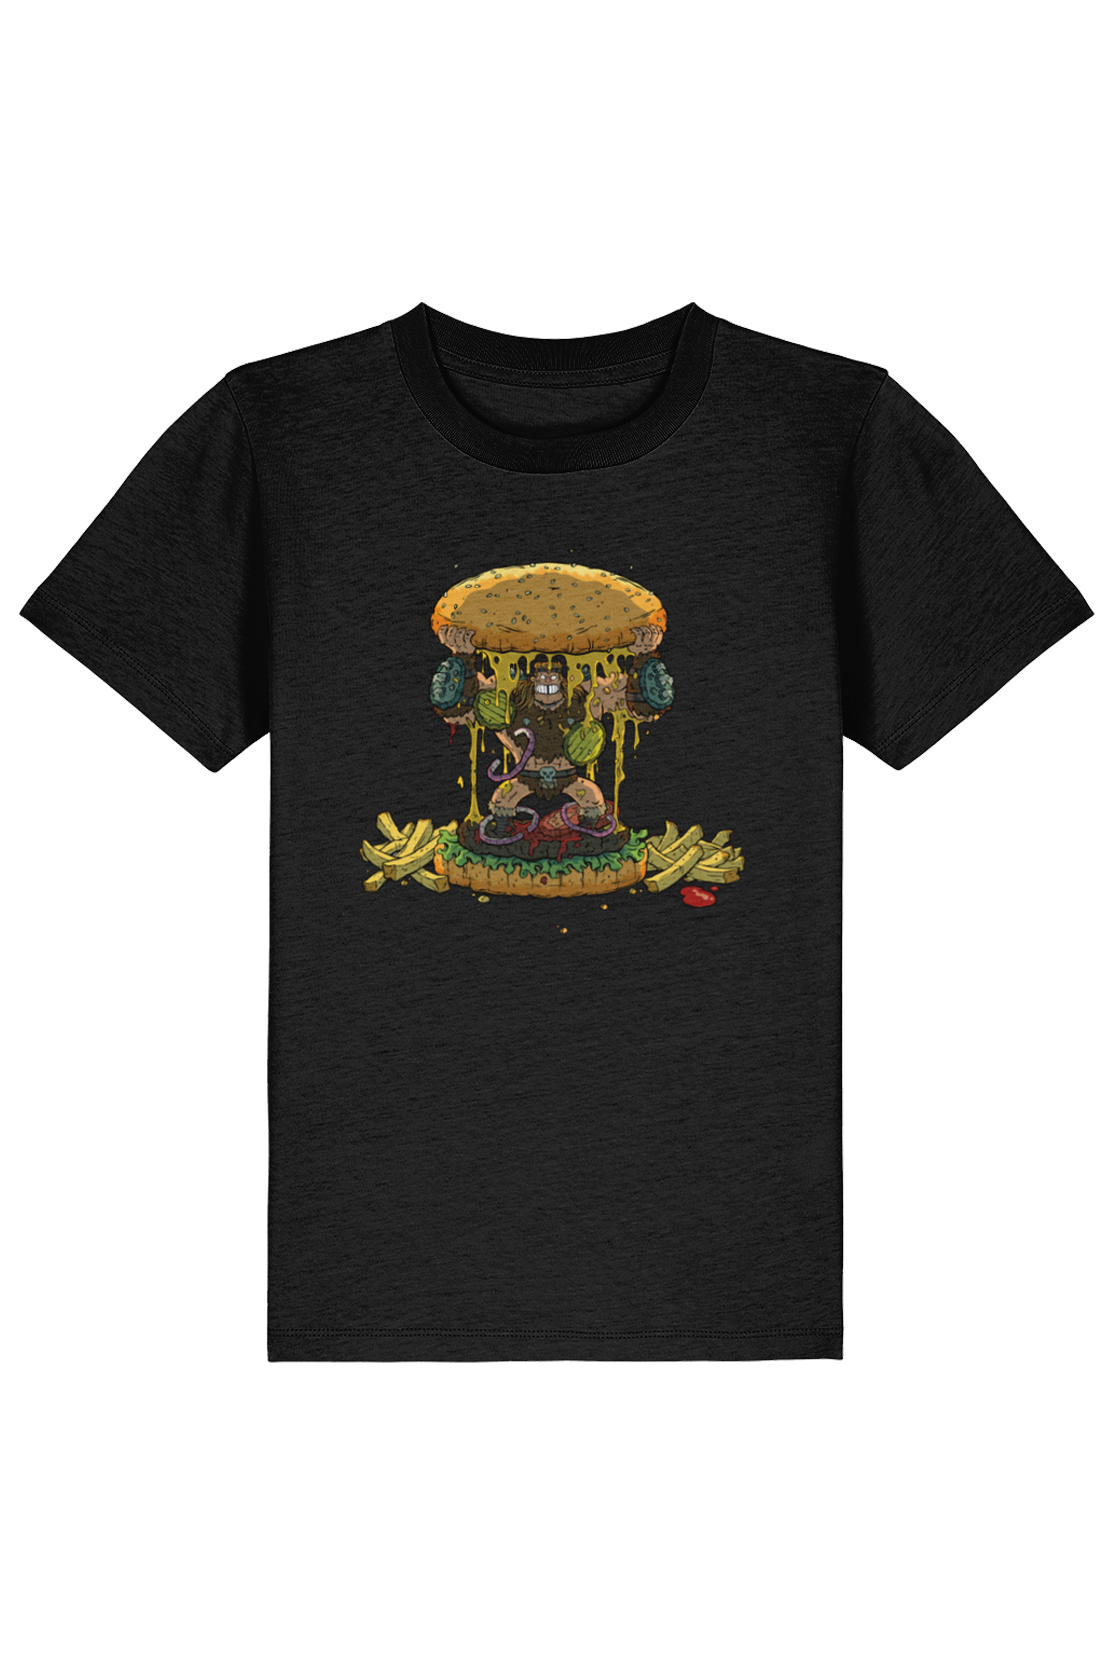 Gorebrah Hamburger kids t-shirt